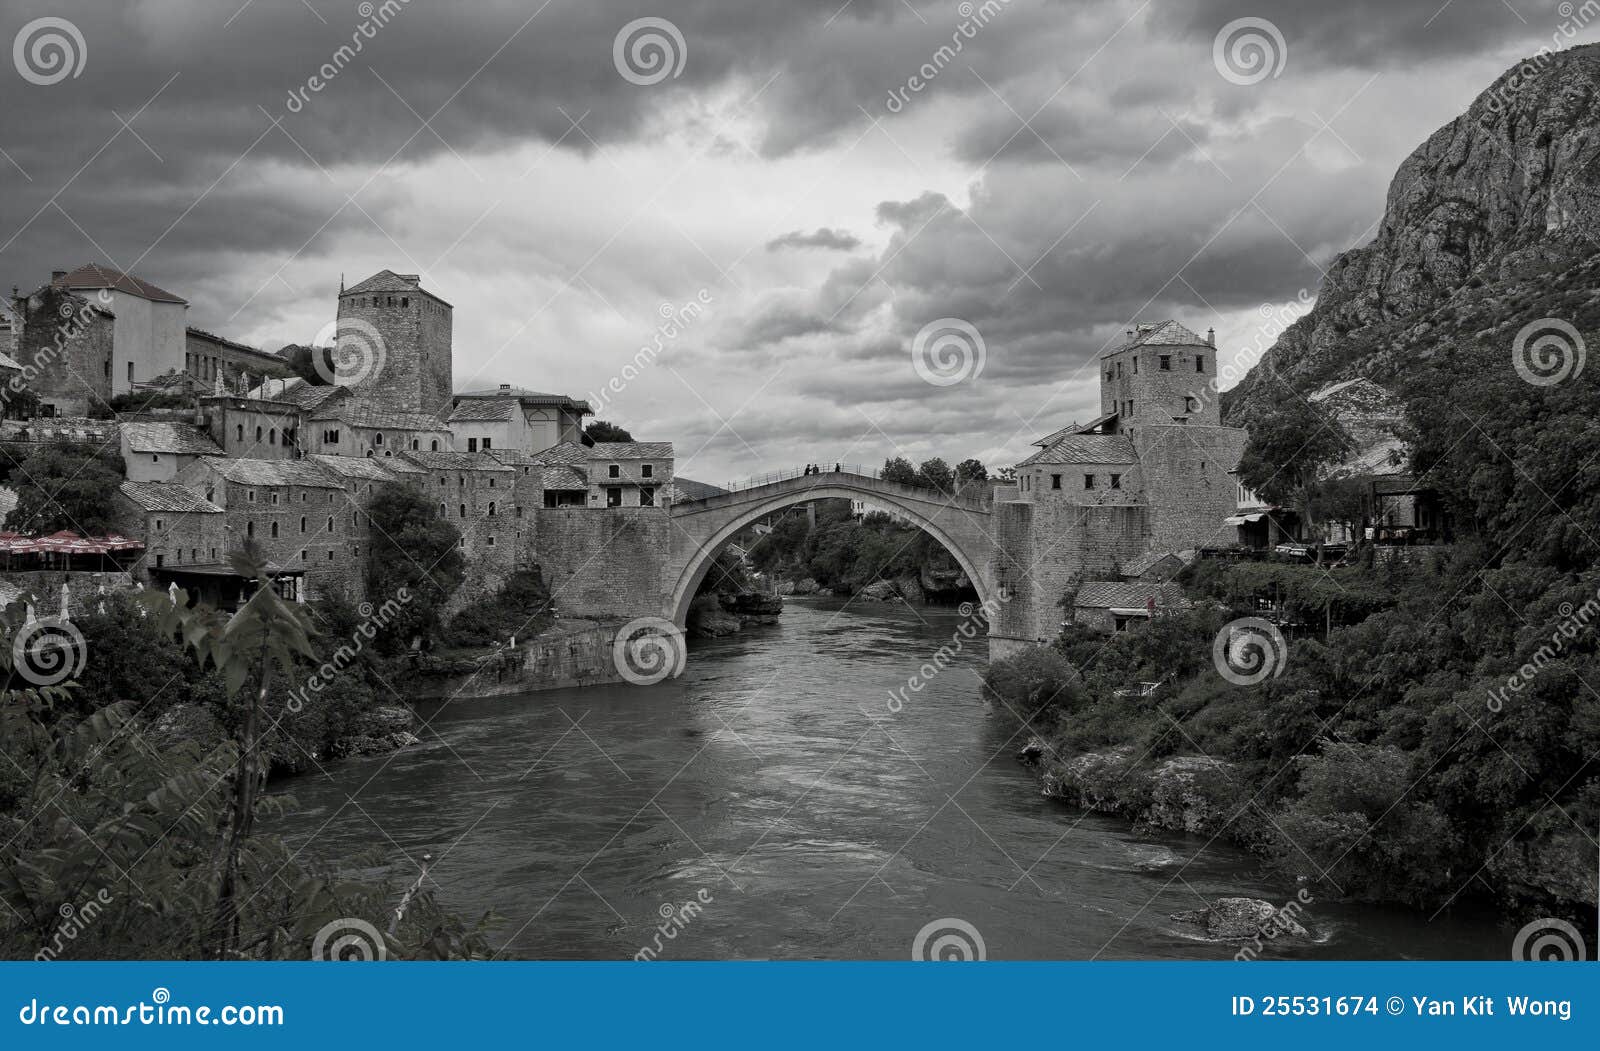 mostar bridge, mostar, bosnia and herzegovina